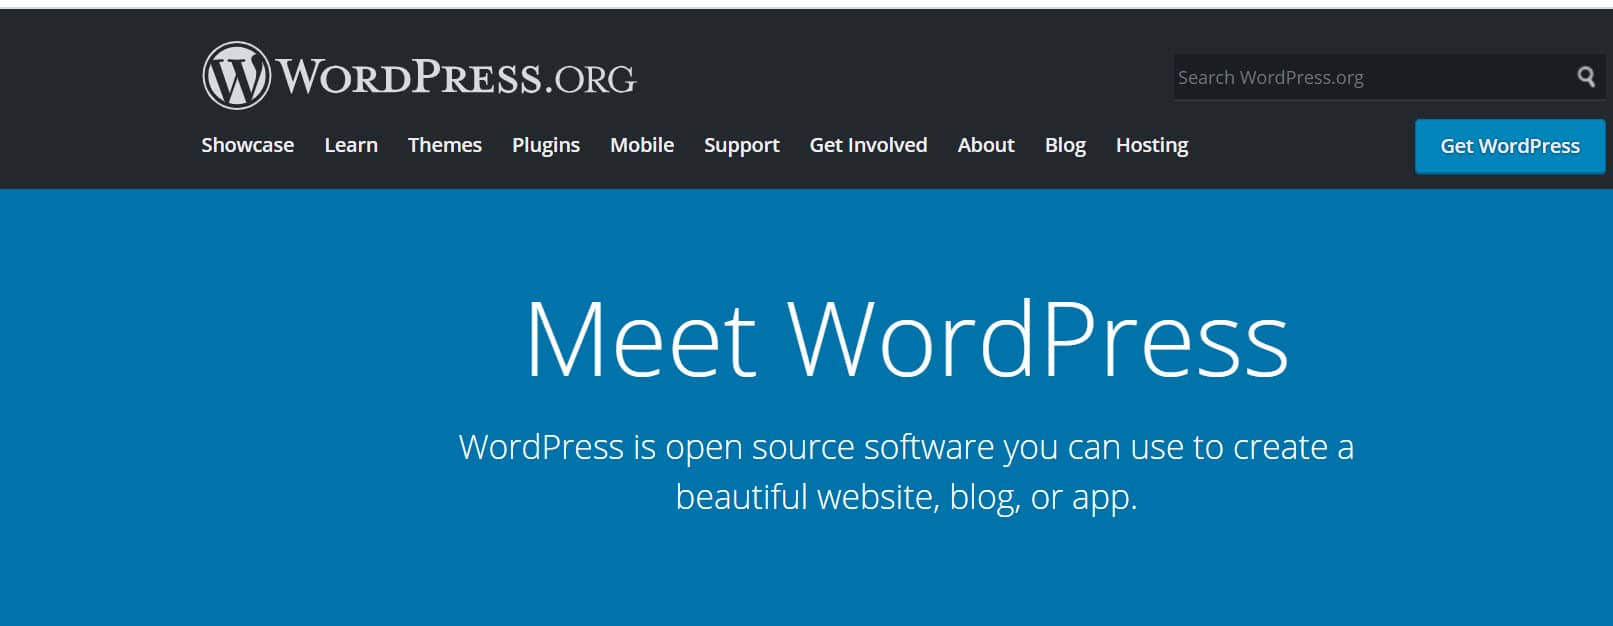 dark blue background with text saying Meet WordPress.org